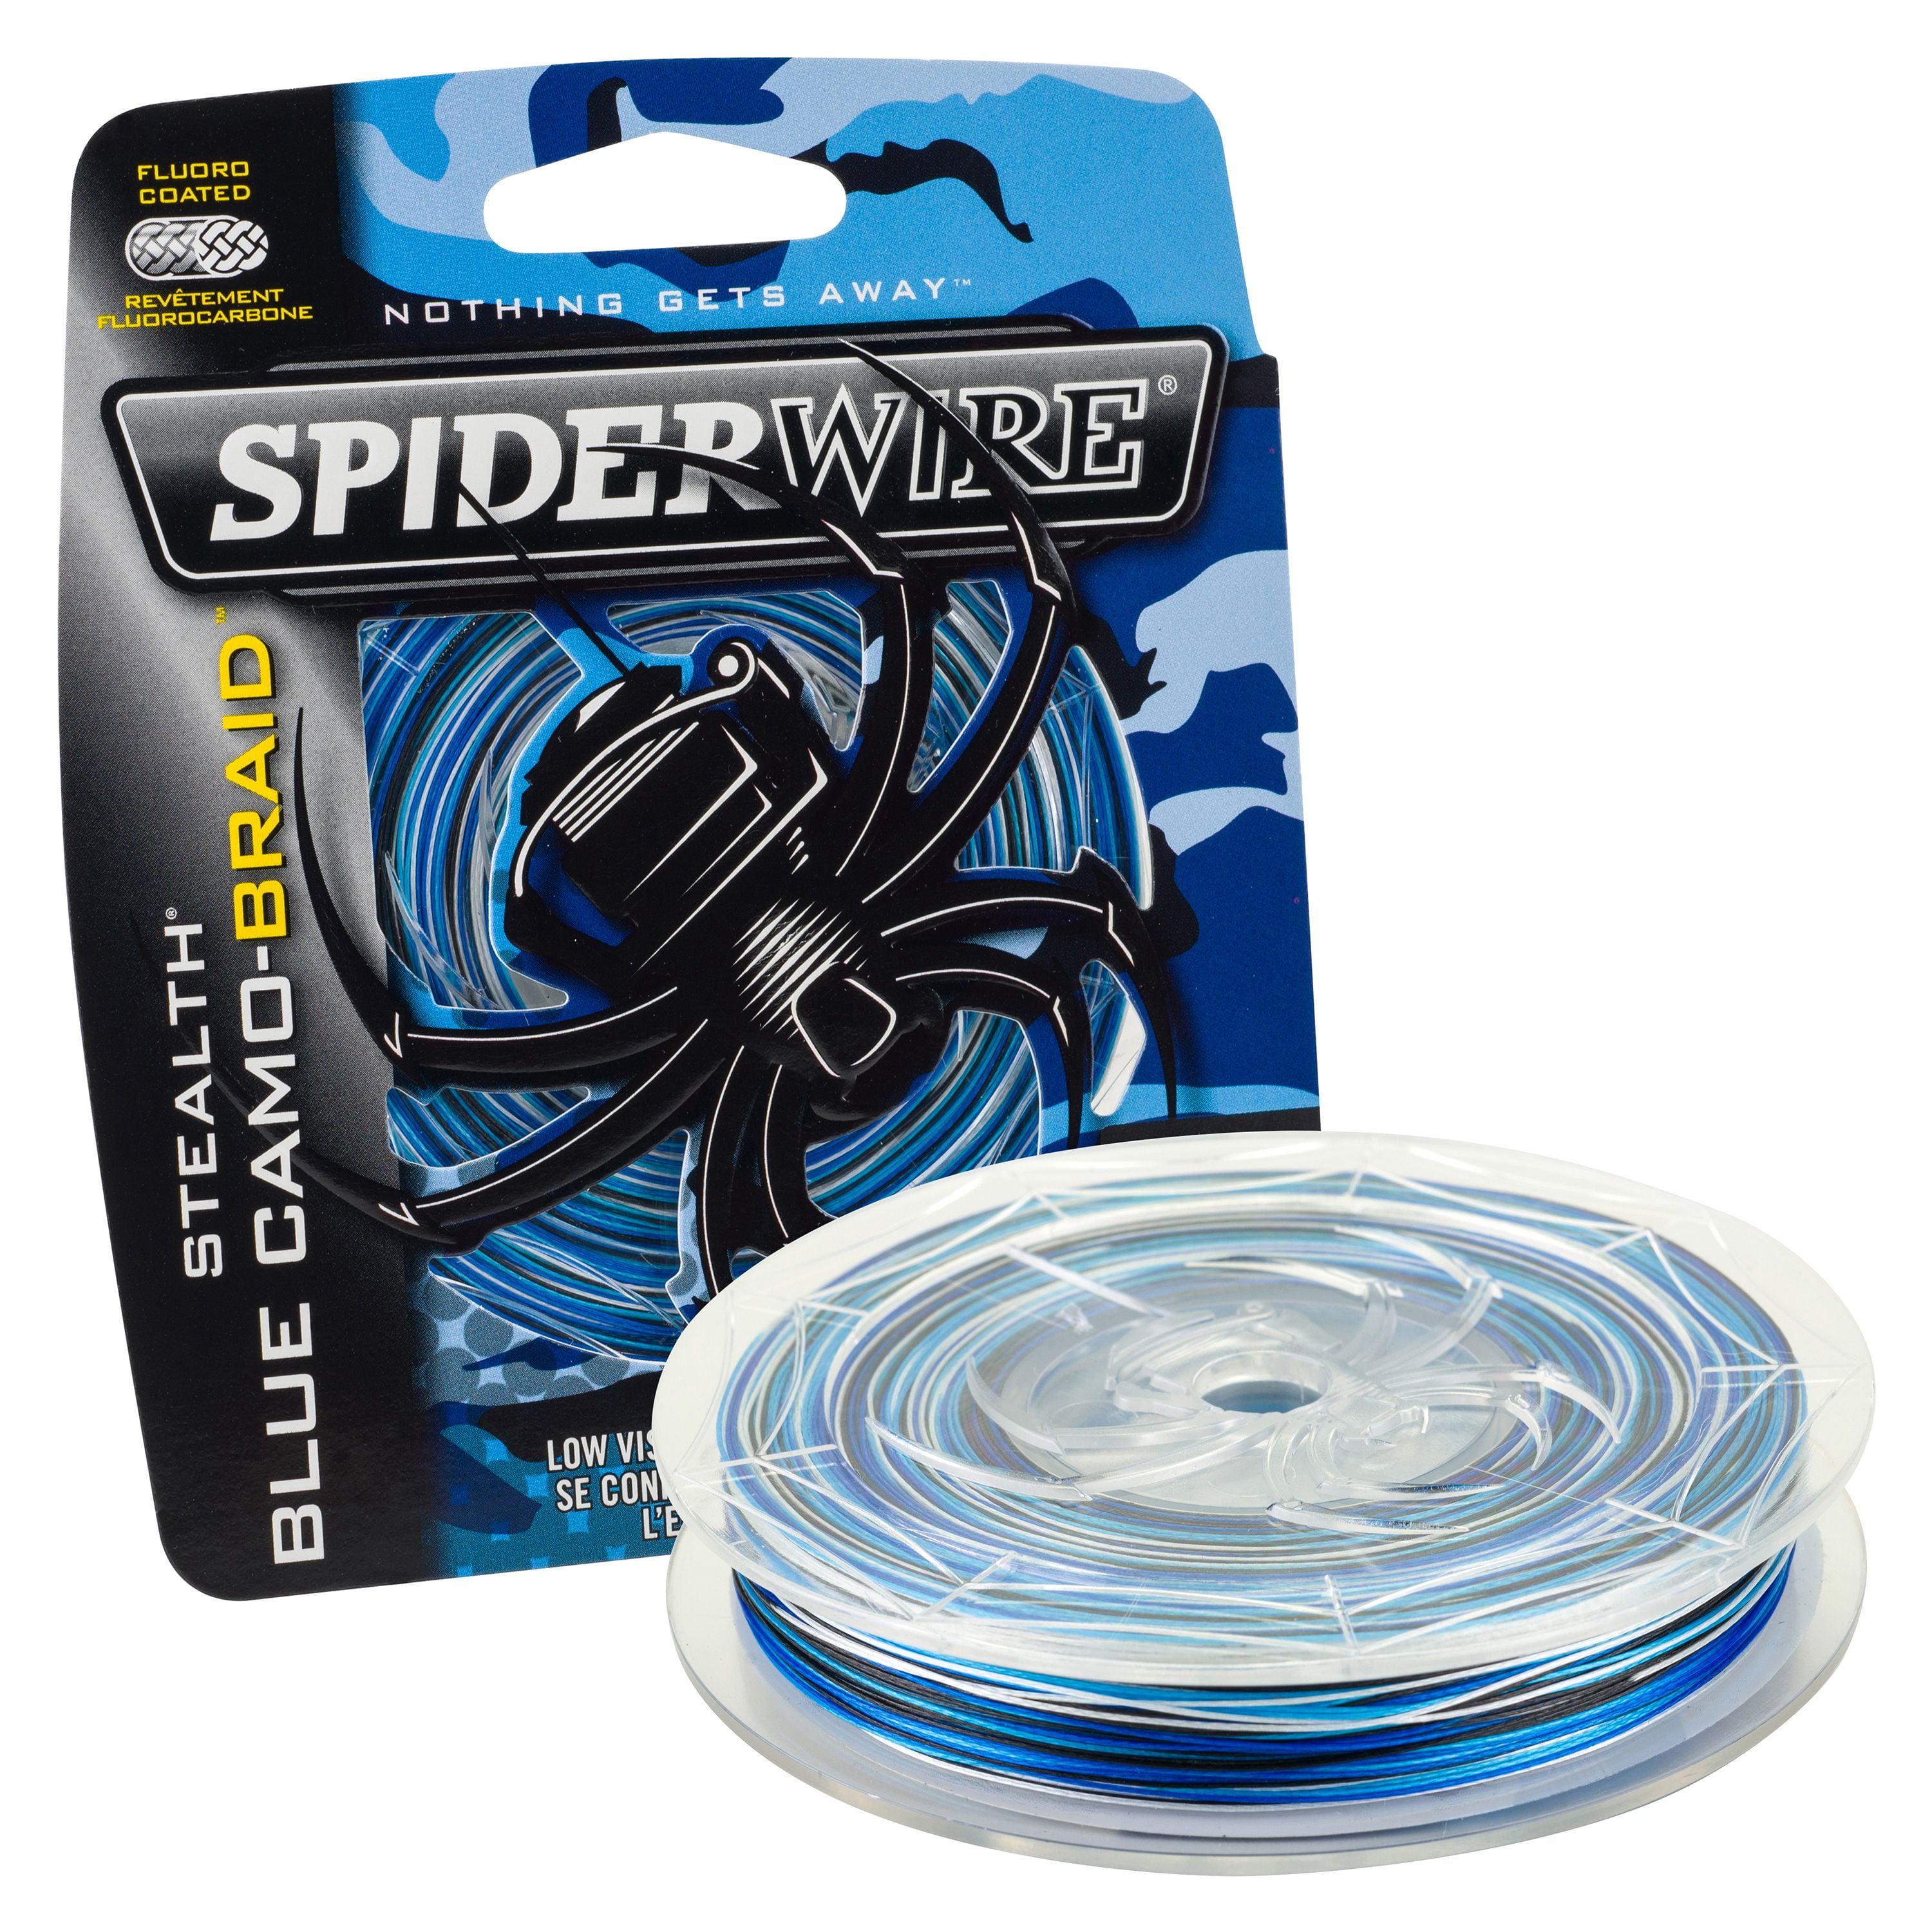 Spiderwire Hat Micro Filament Line Cap Fishing Fish Columbia South Carolina  SC